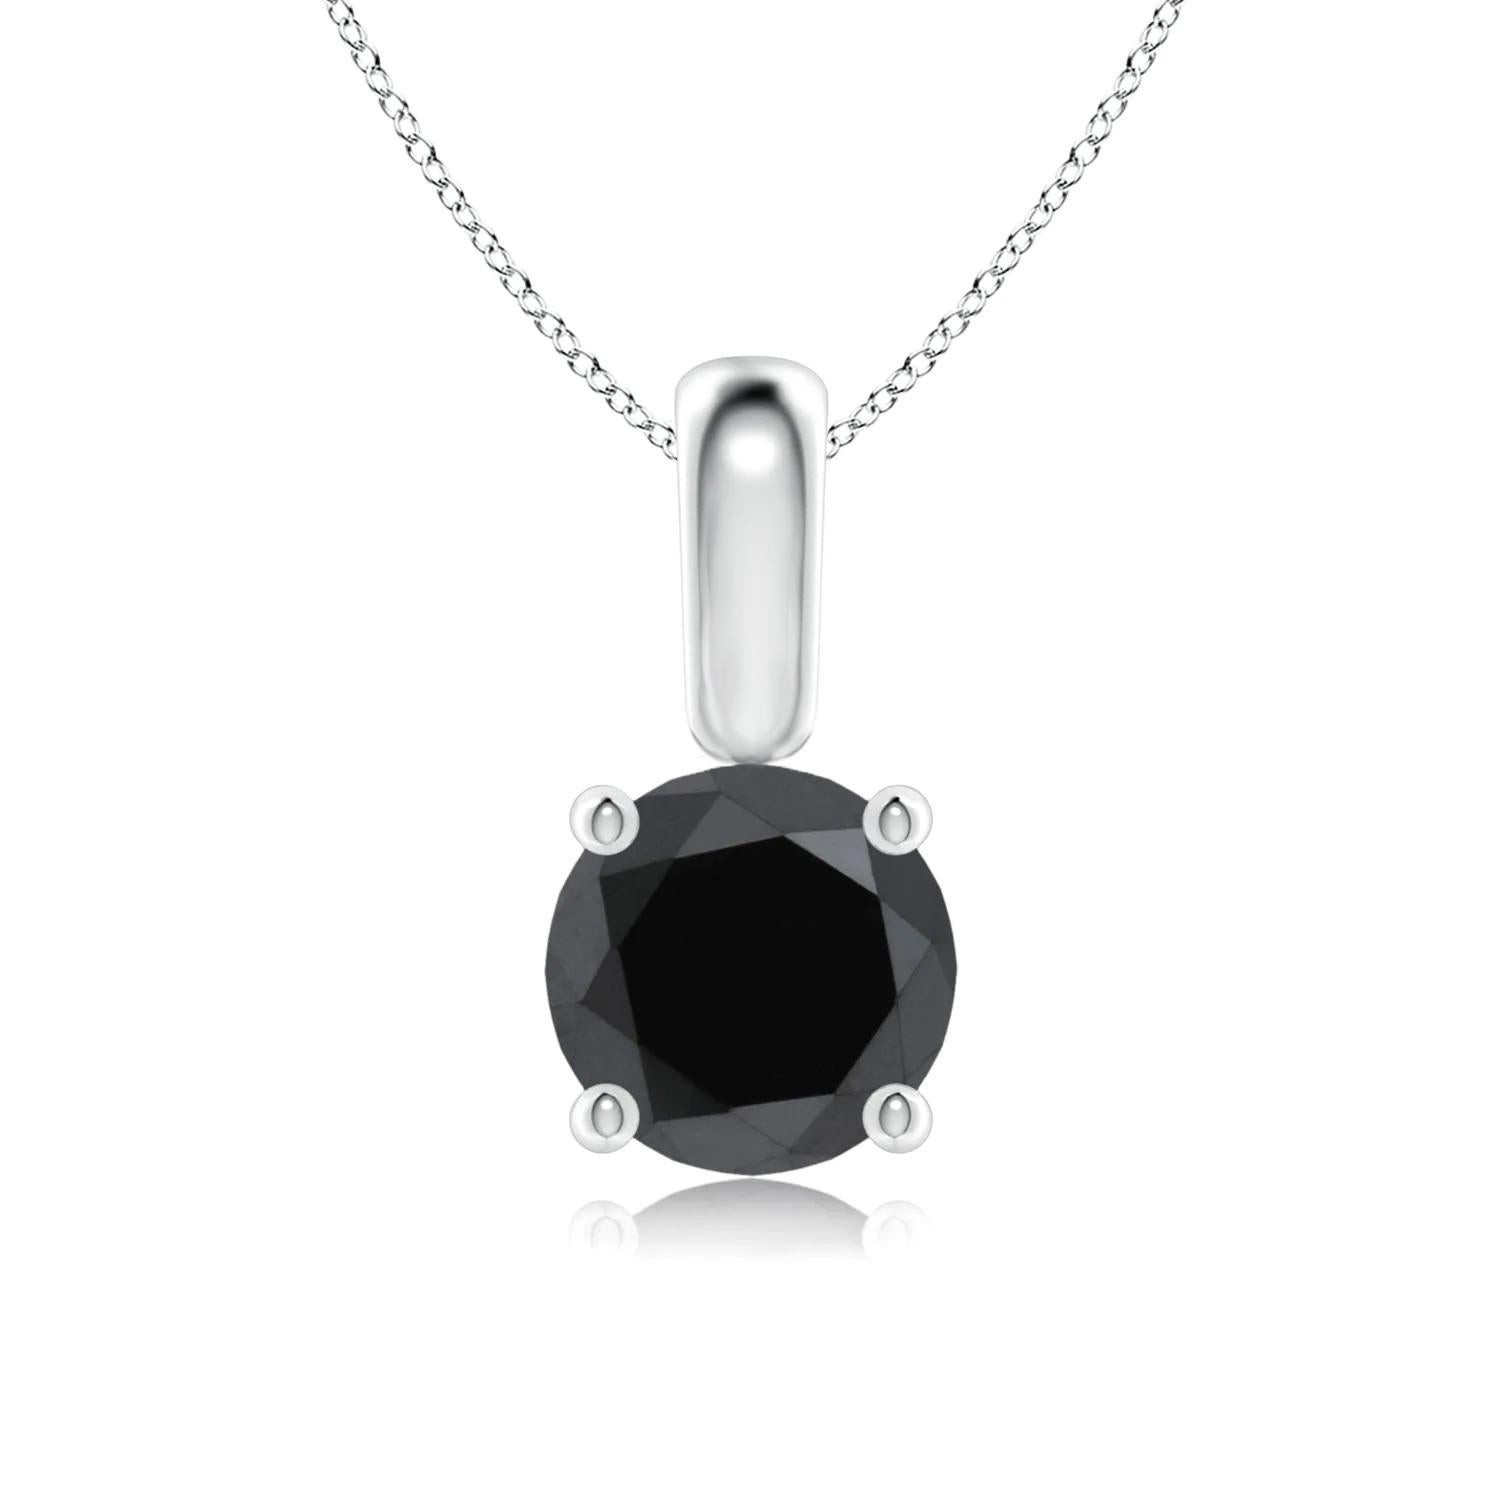 Contemporary 1.51 Carat Round Black Diamond Solitaire Pendant Necklace in 14K White Gold